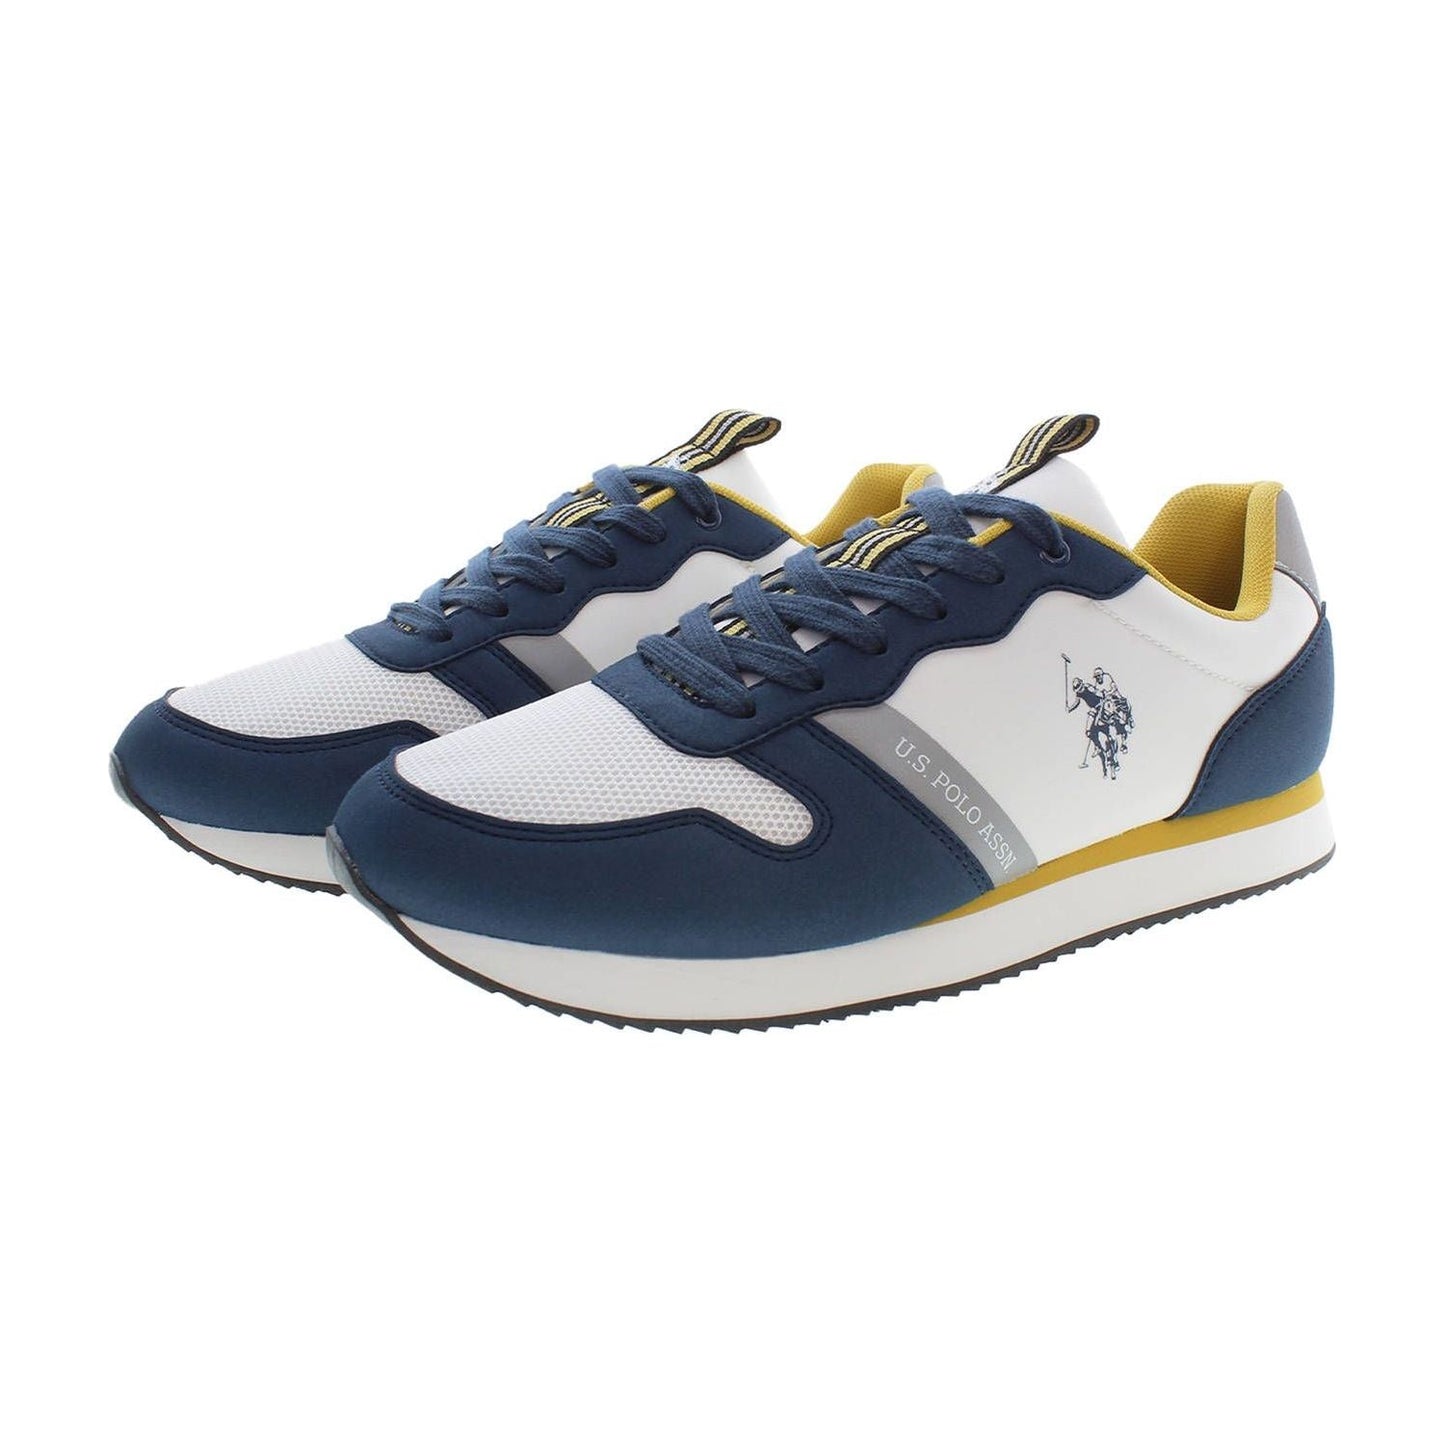 U.S. POLO ASSN.Sleek Blue Sneakers with Contrast DetailsMcRichard Designer Brands£89.00